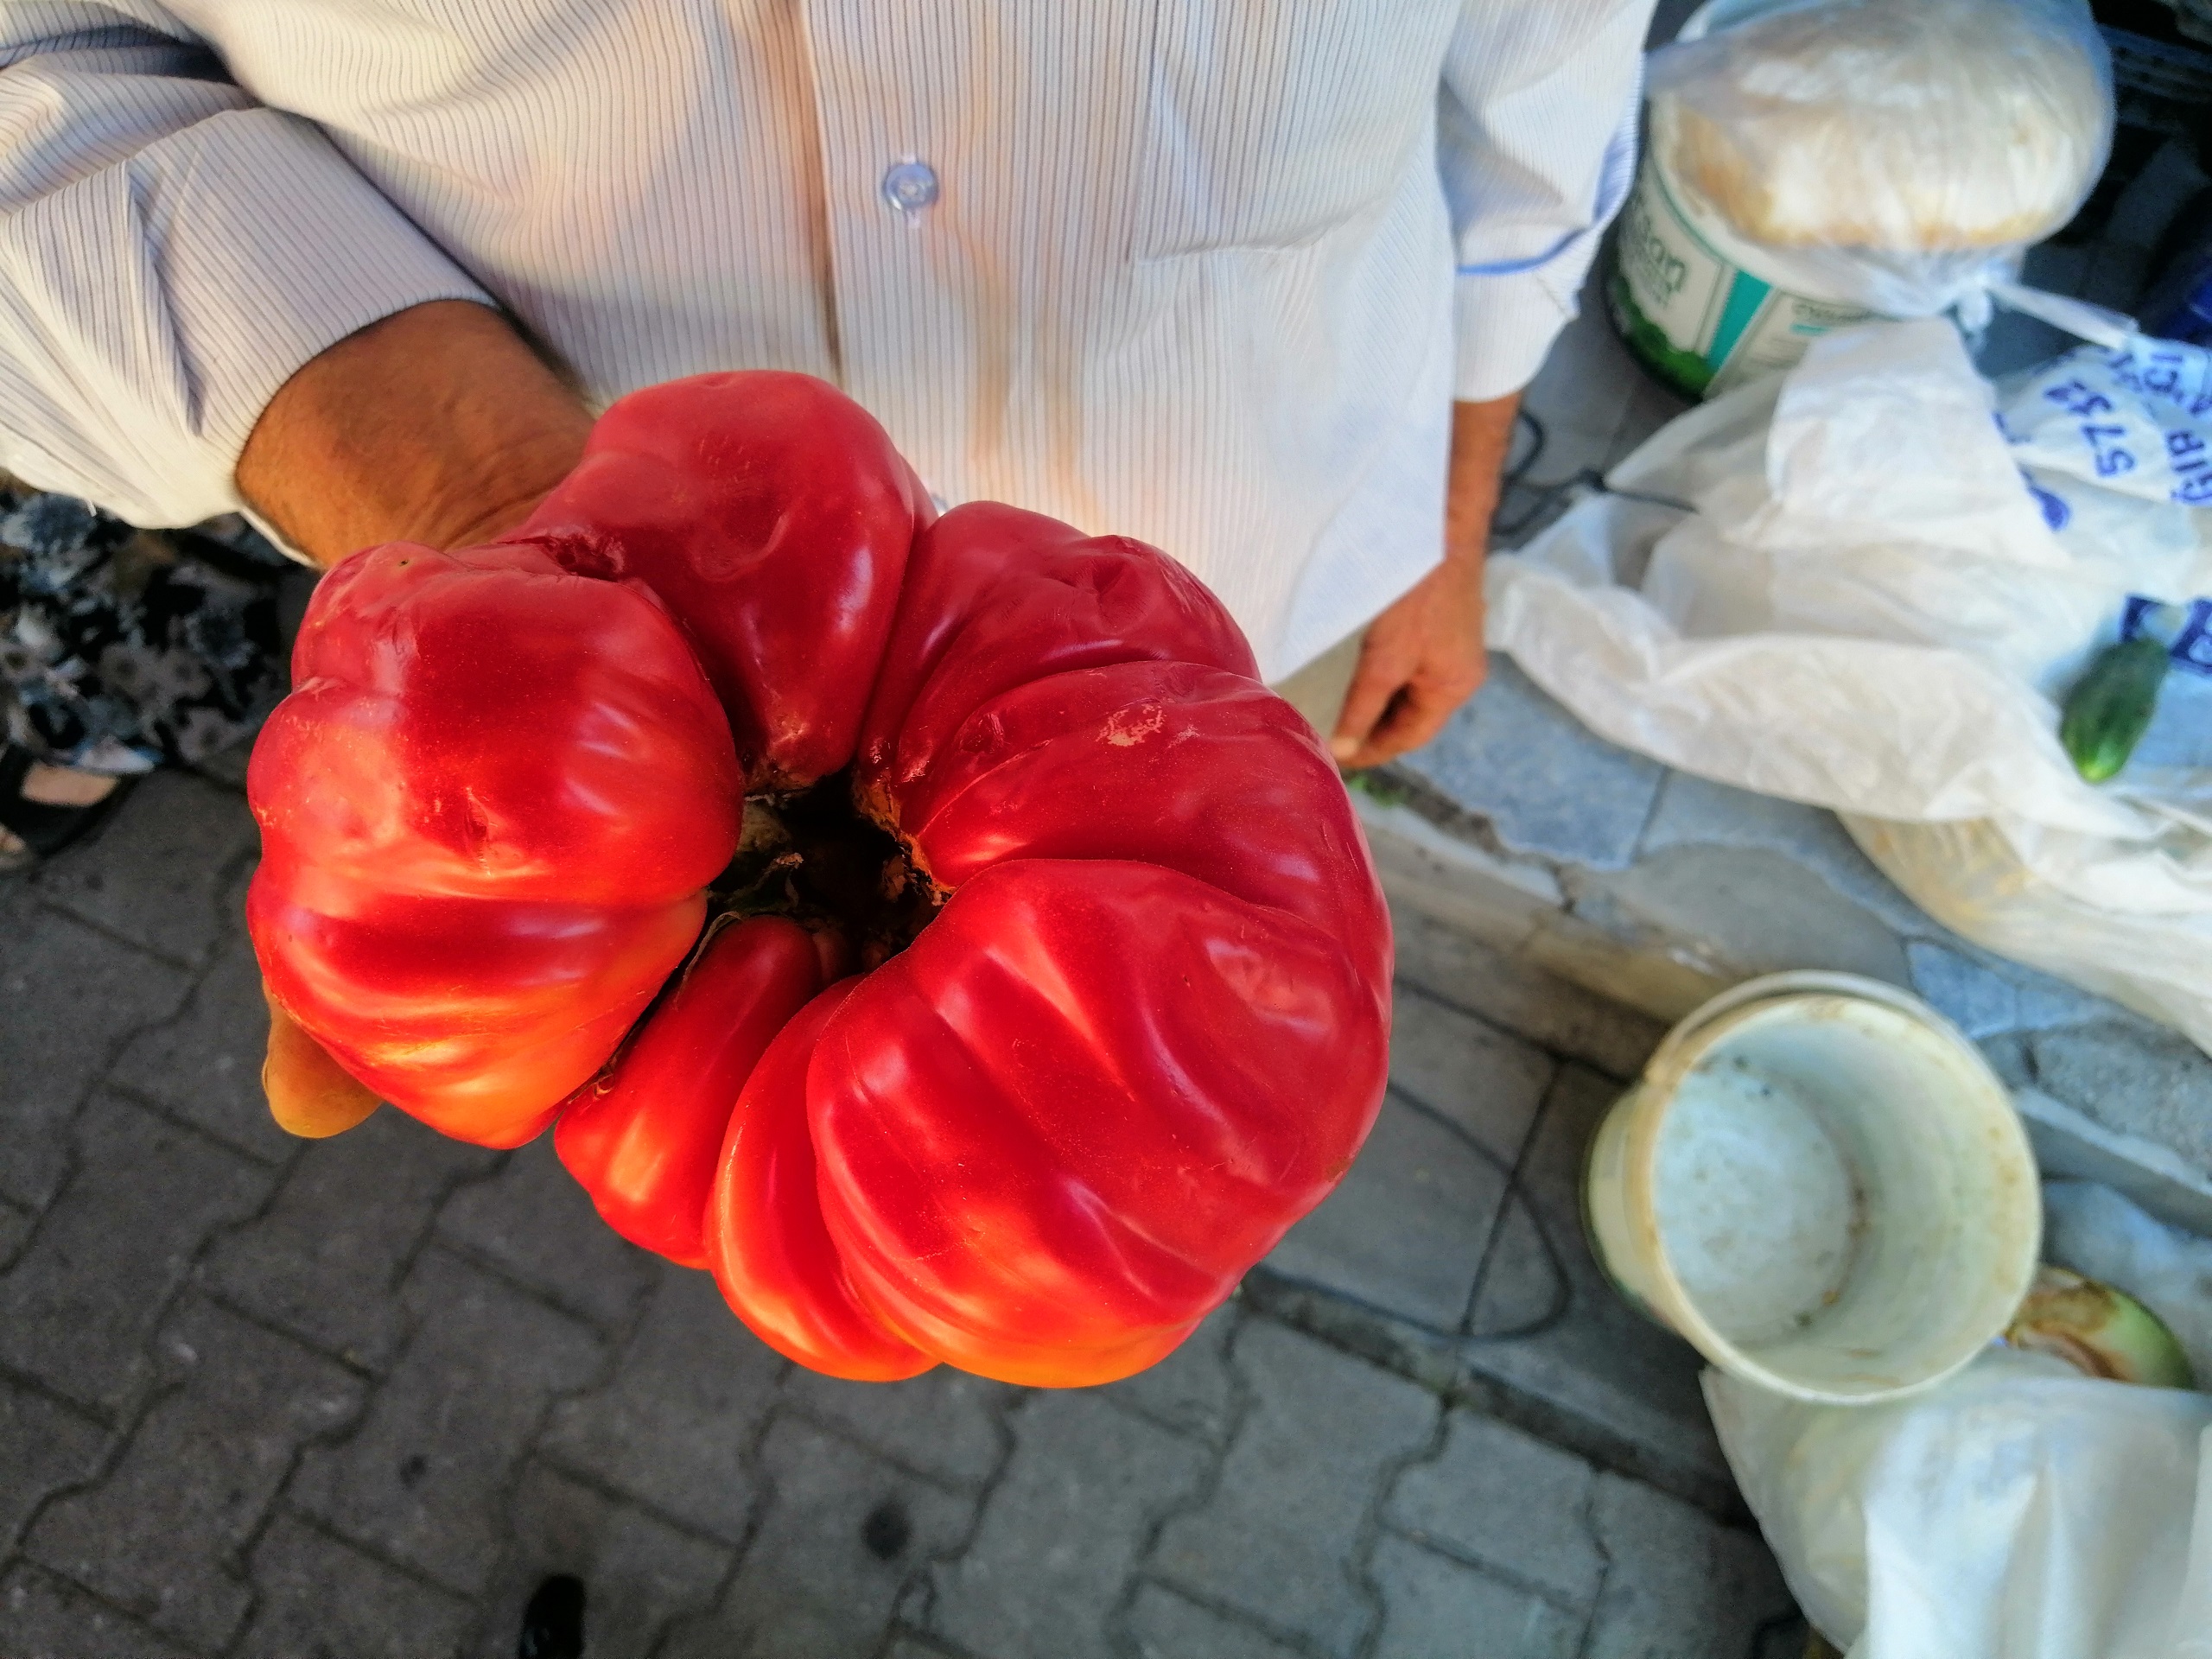 canakkalede-yetisen-1-kilo-120-gramlik-domates-buyukluguyle-sasirtti-4962-dhaphoto6.jpg